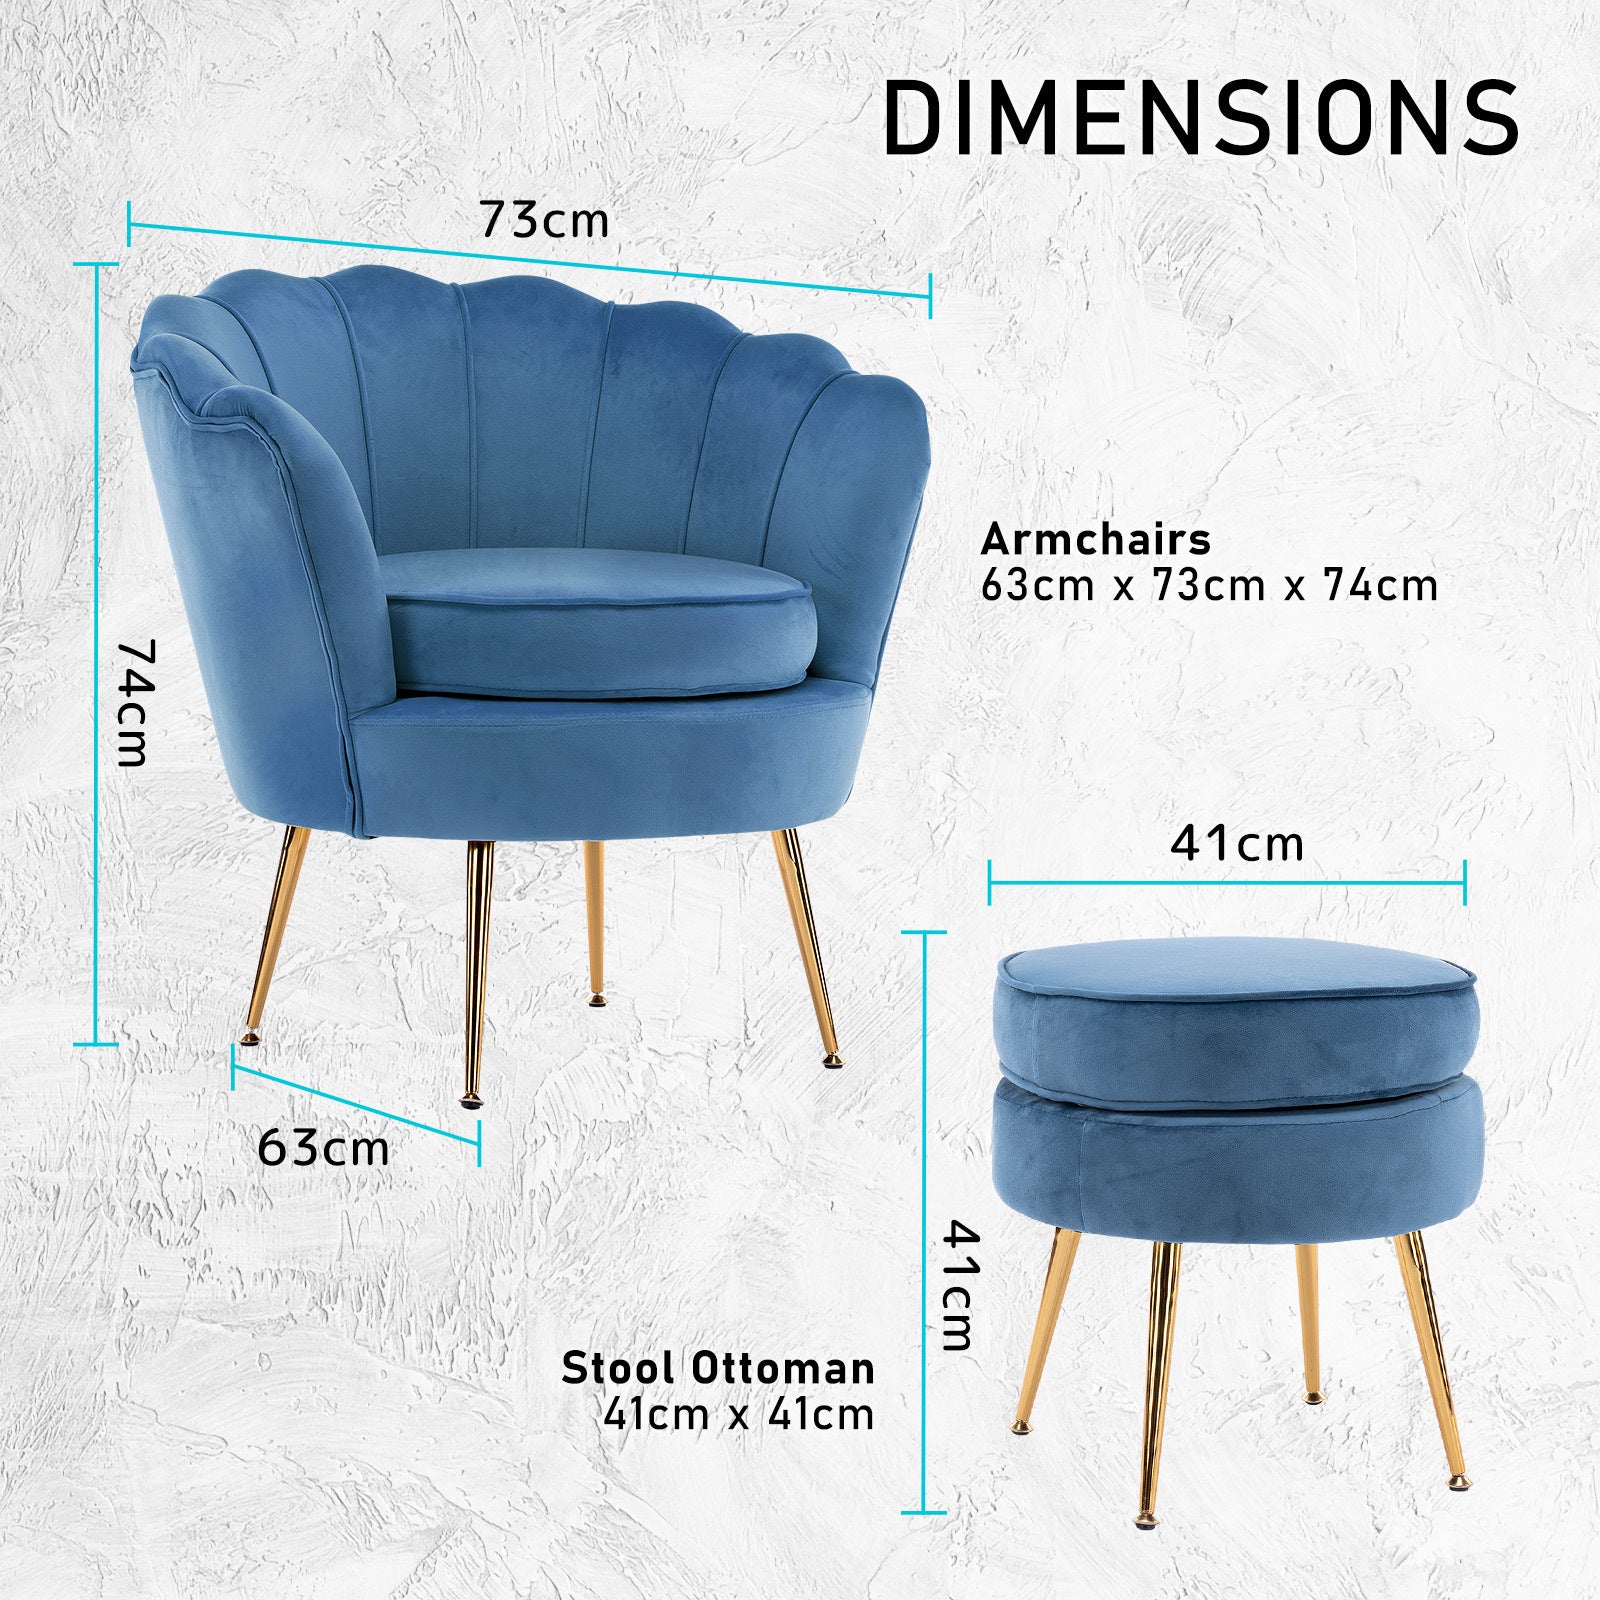 La Bella Shell Scallop Navy Blue Armchair Accent Chair Velvet + Round Ottoman Footstool - BM House & Garden